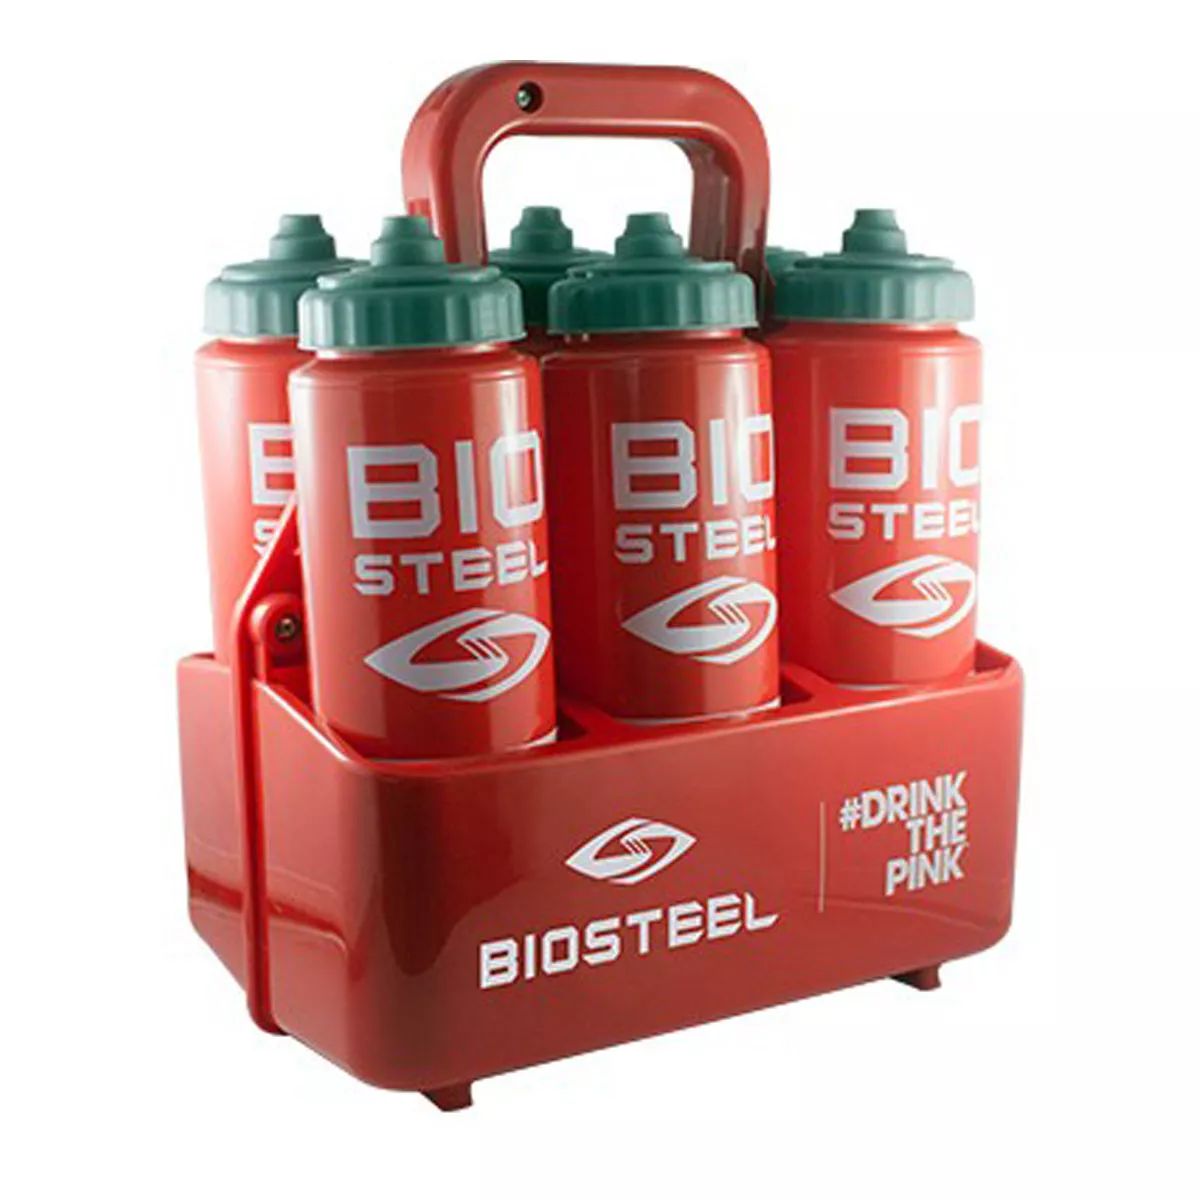 Image of Biosteel Team Water Bottle Carrier Holds 6 Water Bottles